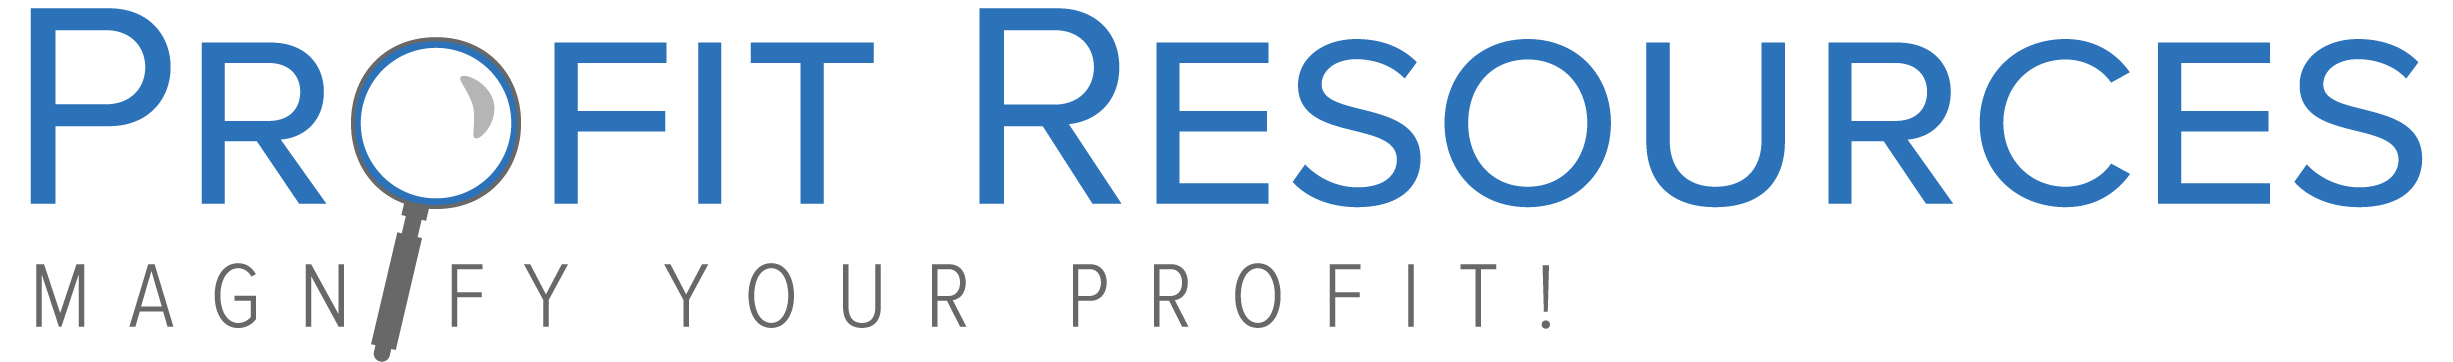 profit resources logo